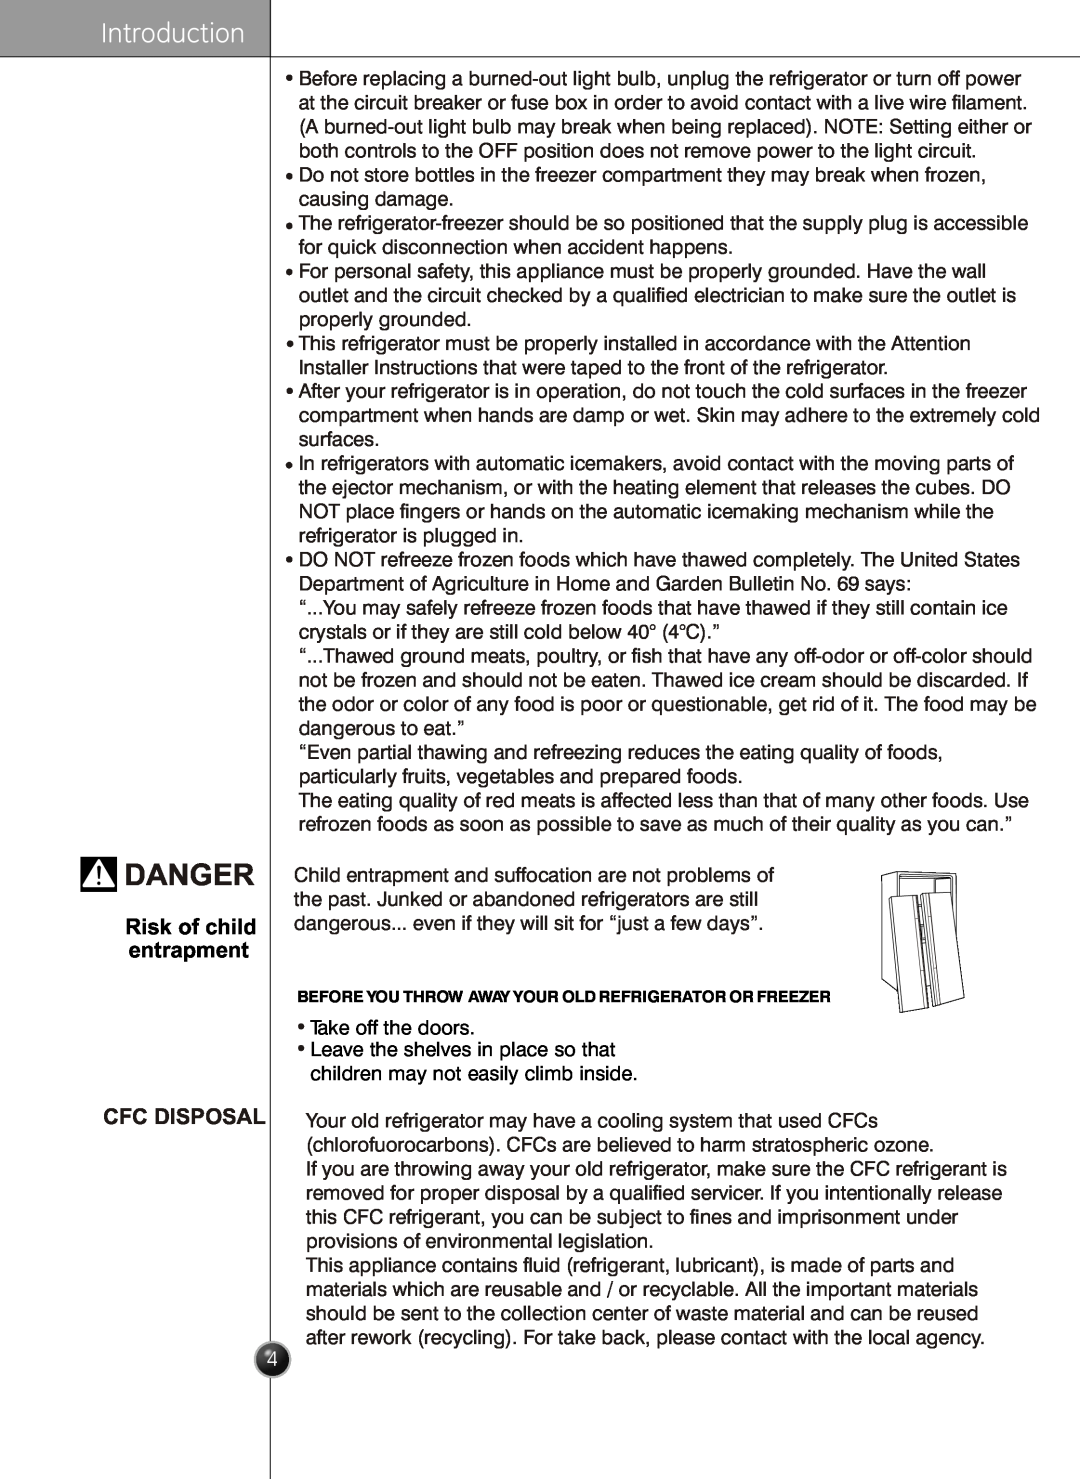 LG Electronics LSC26905 owner manual Danger, Introduction, Risk of child entrapment, Cfc Disposal 